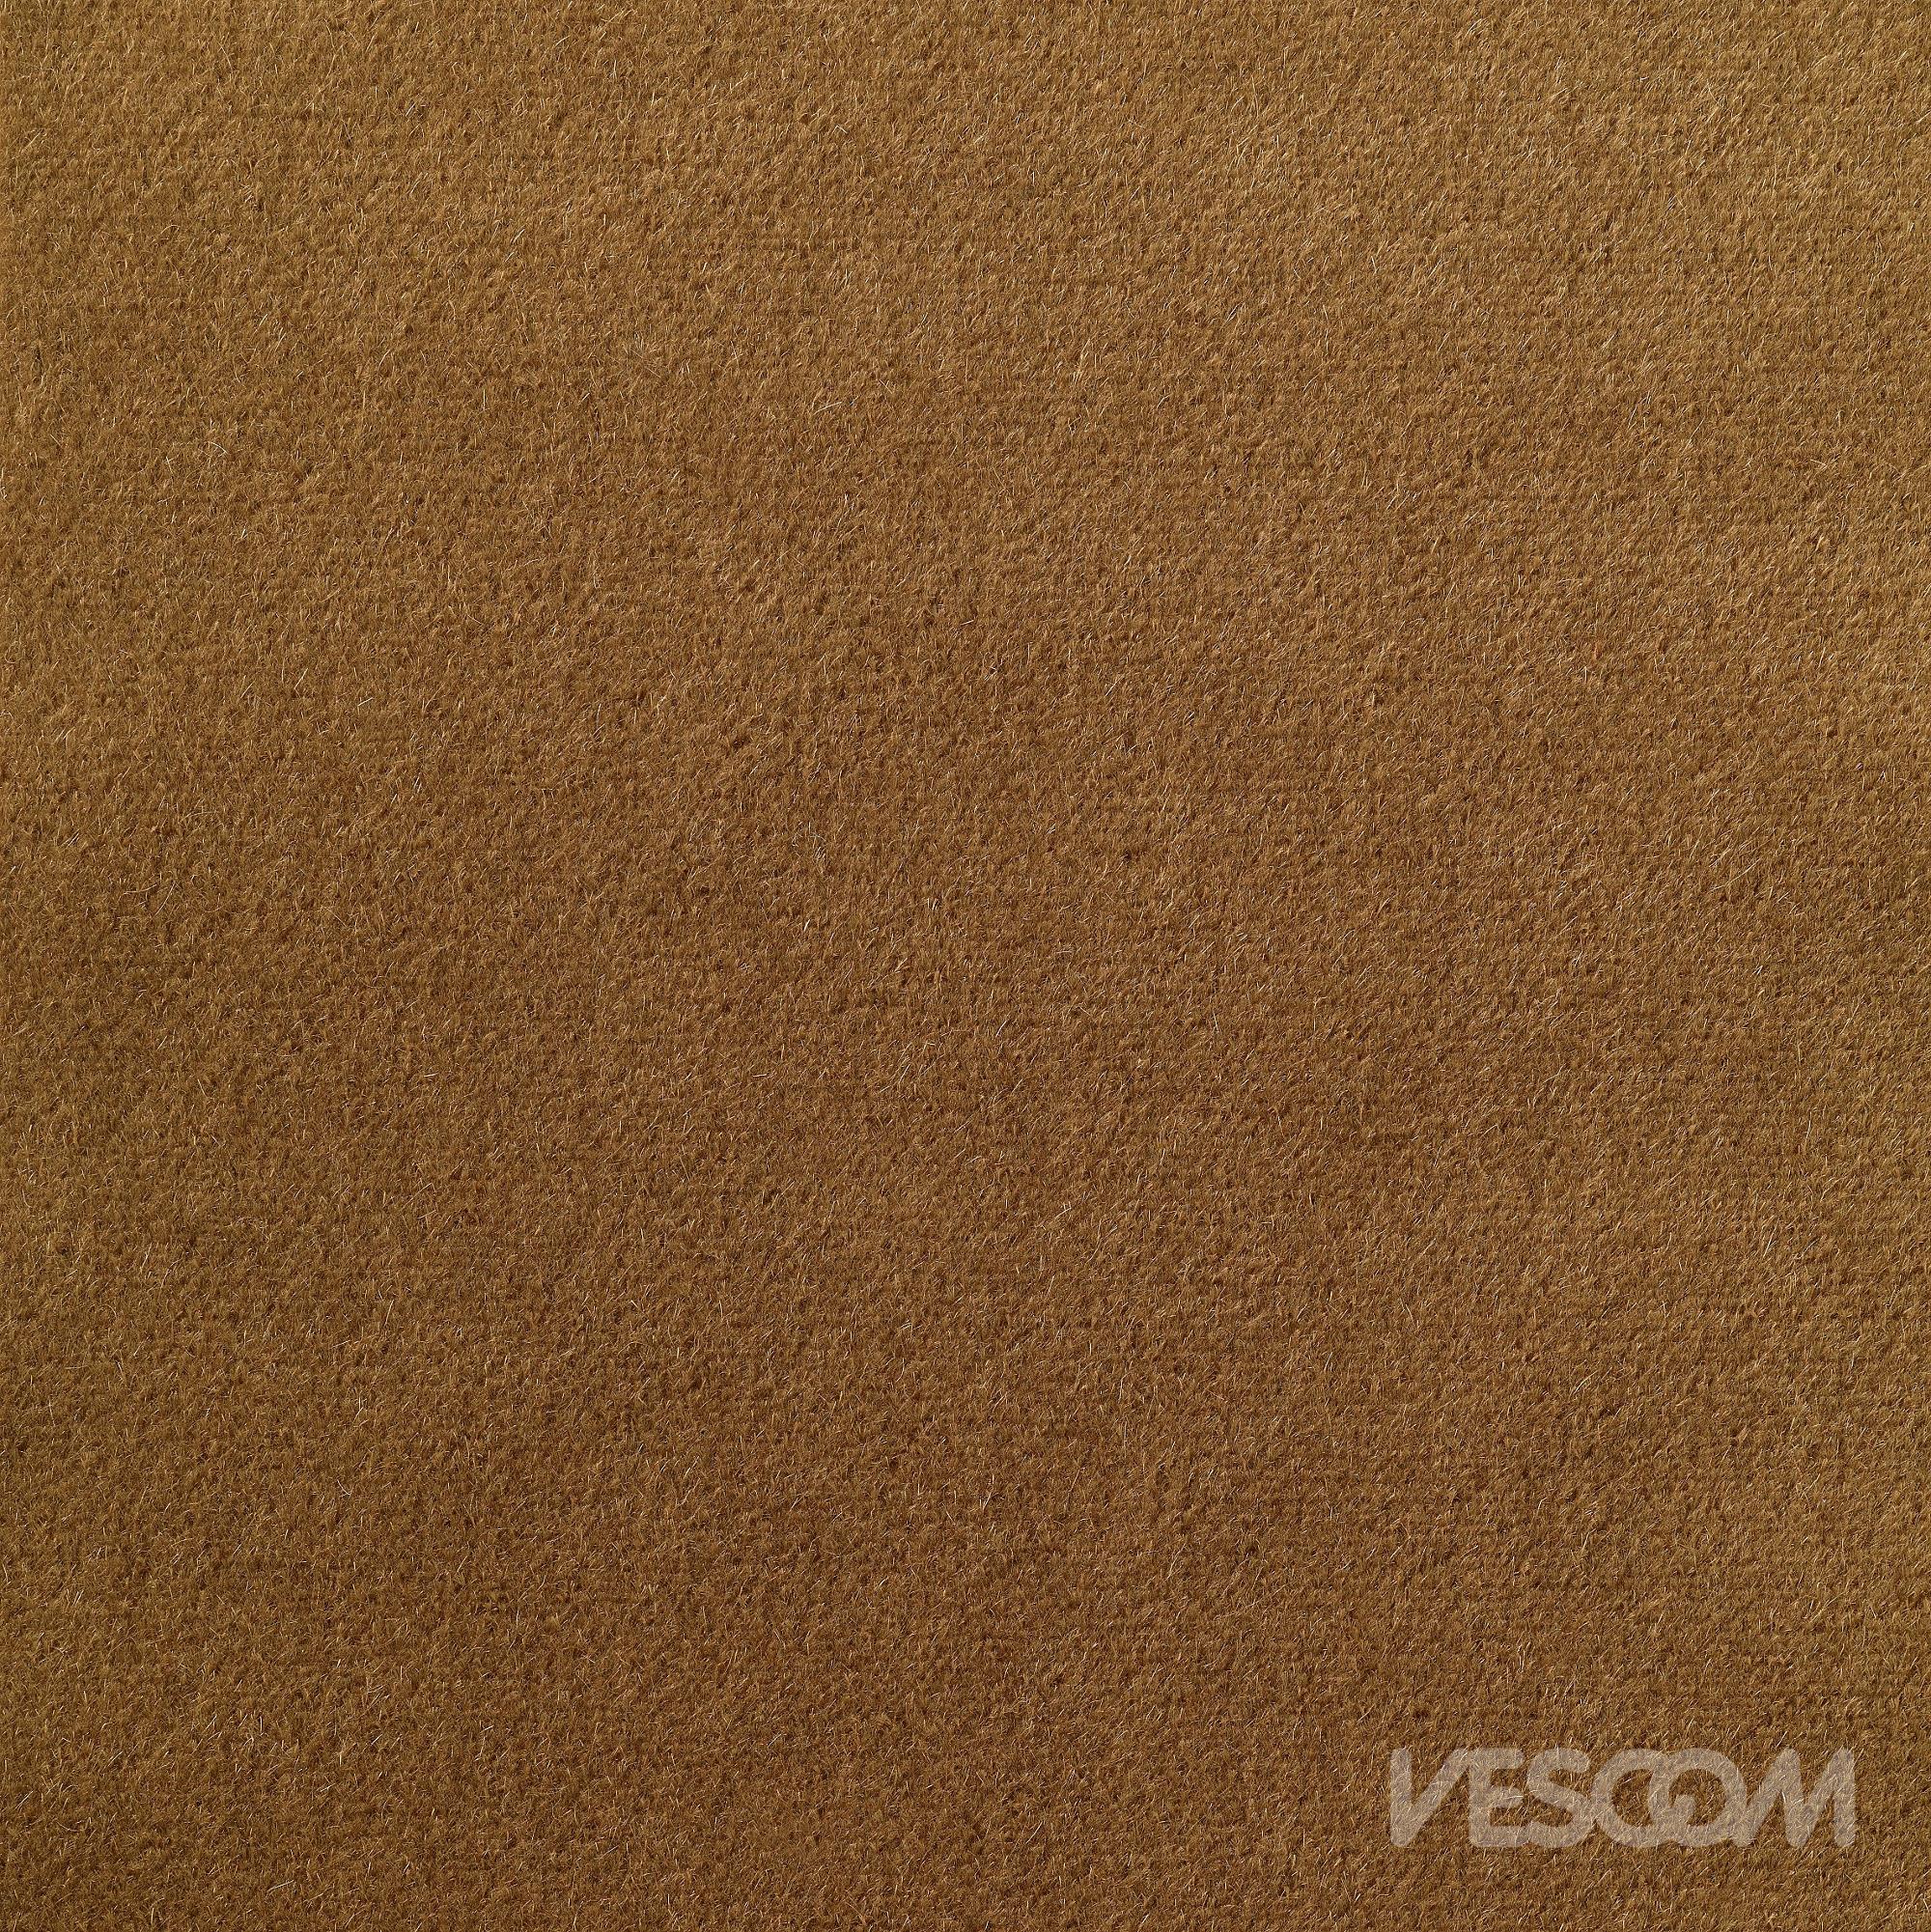 Vescom Ariana Upholstery Fabric 7061.14